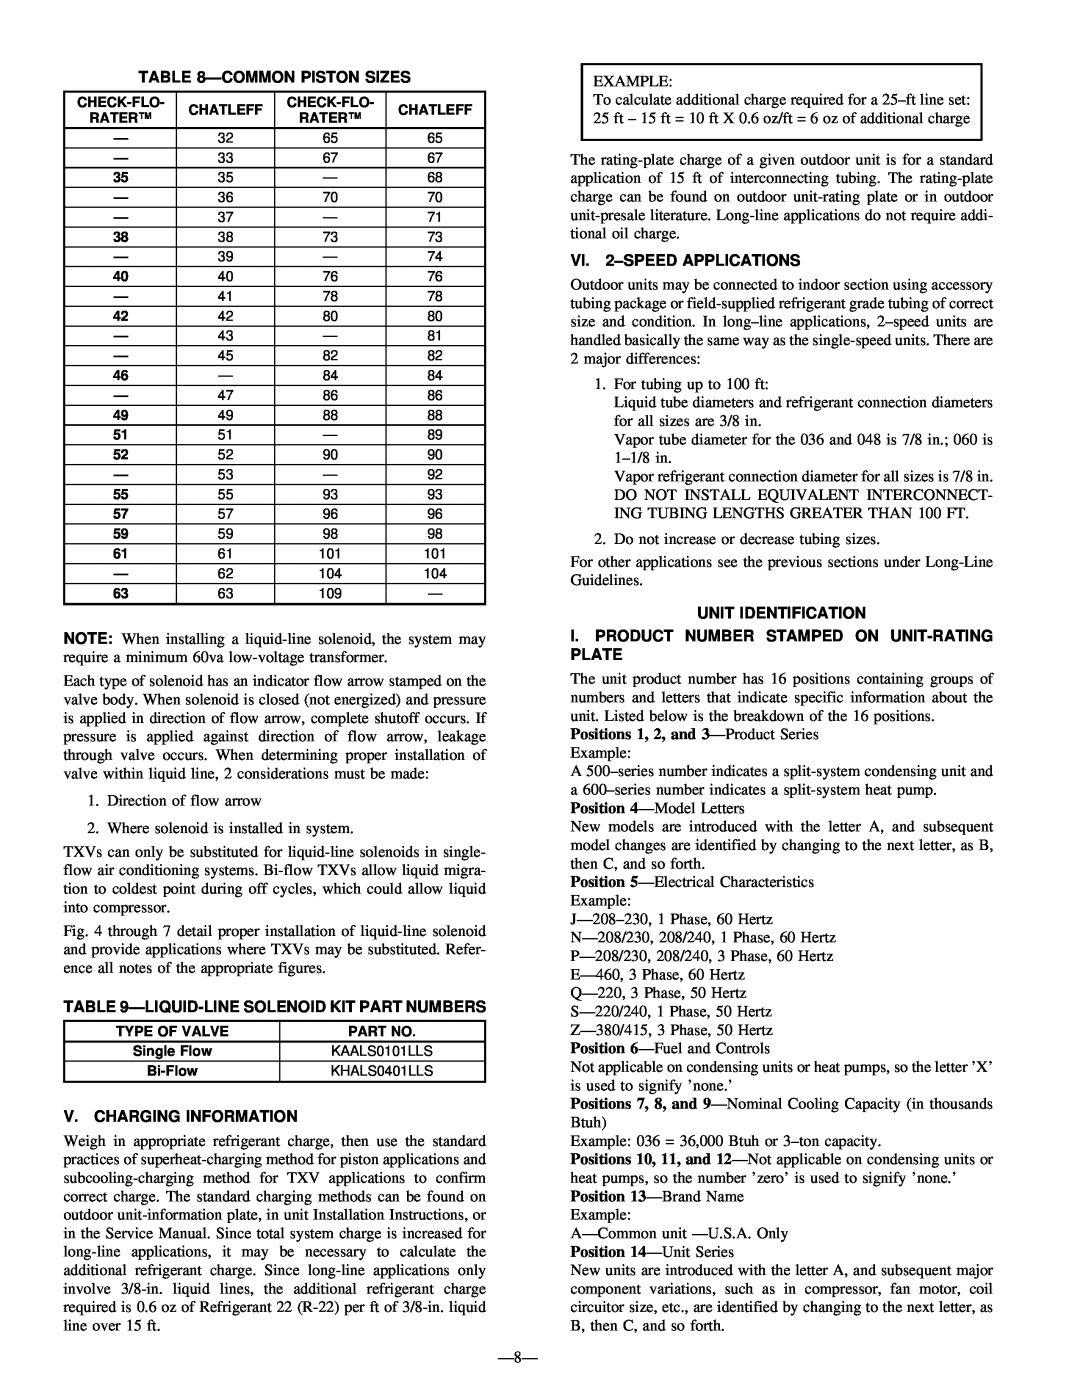 Bryant R-22 Commonpiston Sizes, Liquid-Linesolenoid Kit Part Numbers, V. Charging Information, VI. 2–SPEEDAPPLICATIONS 